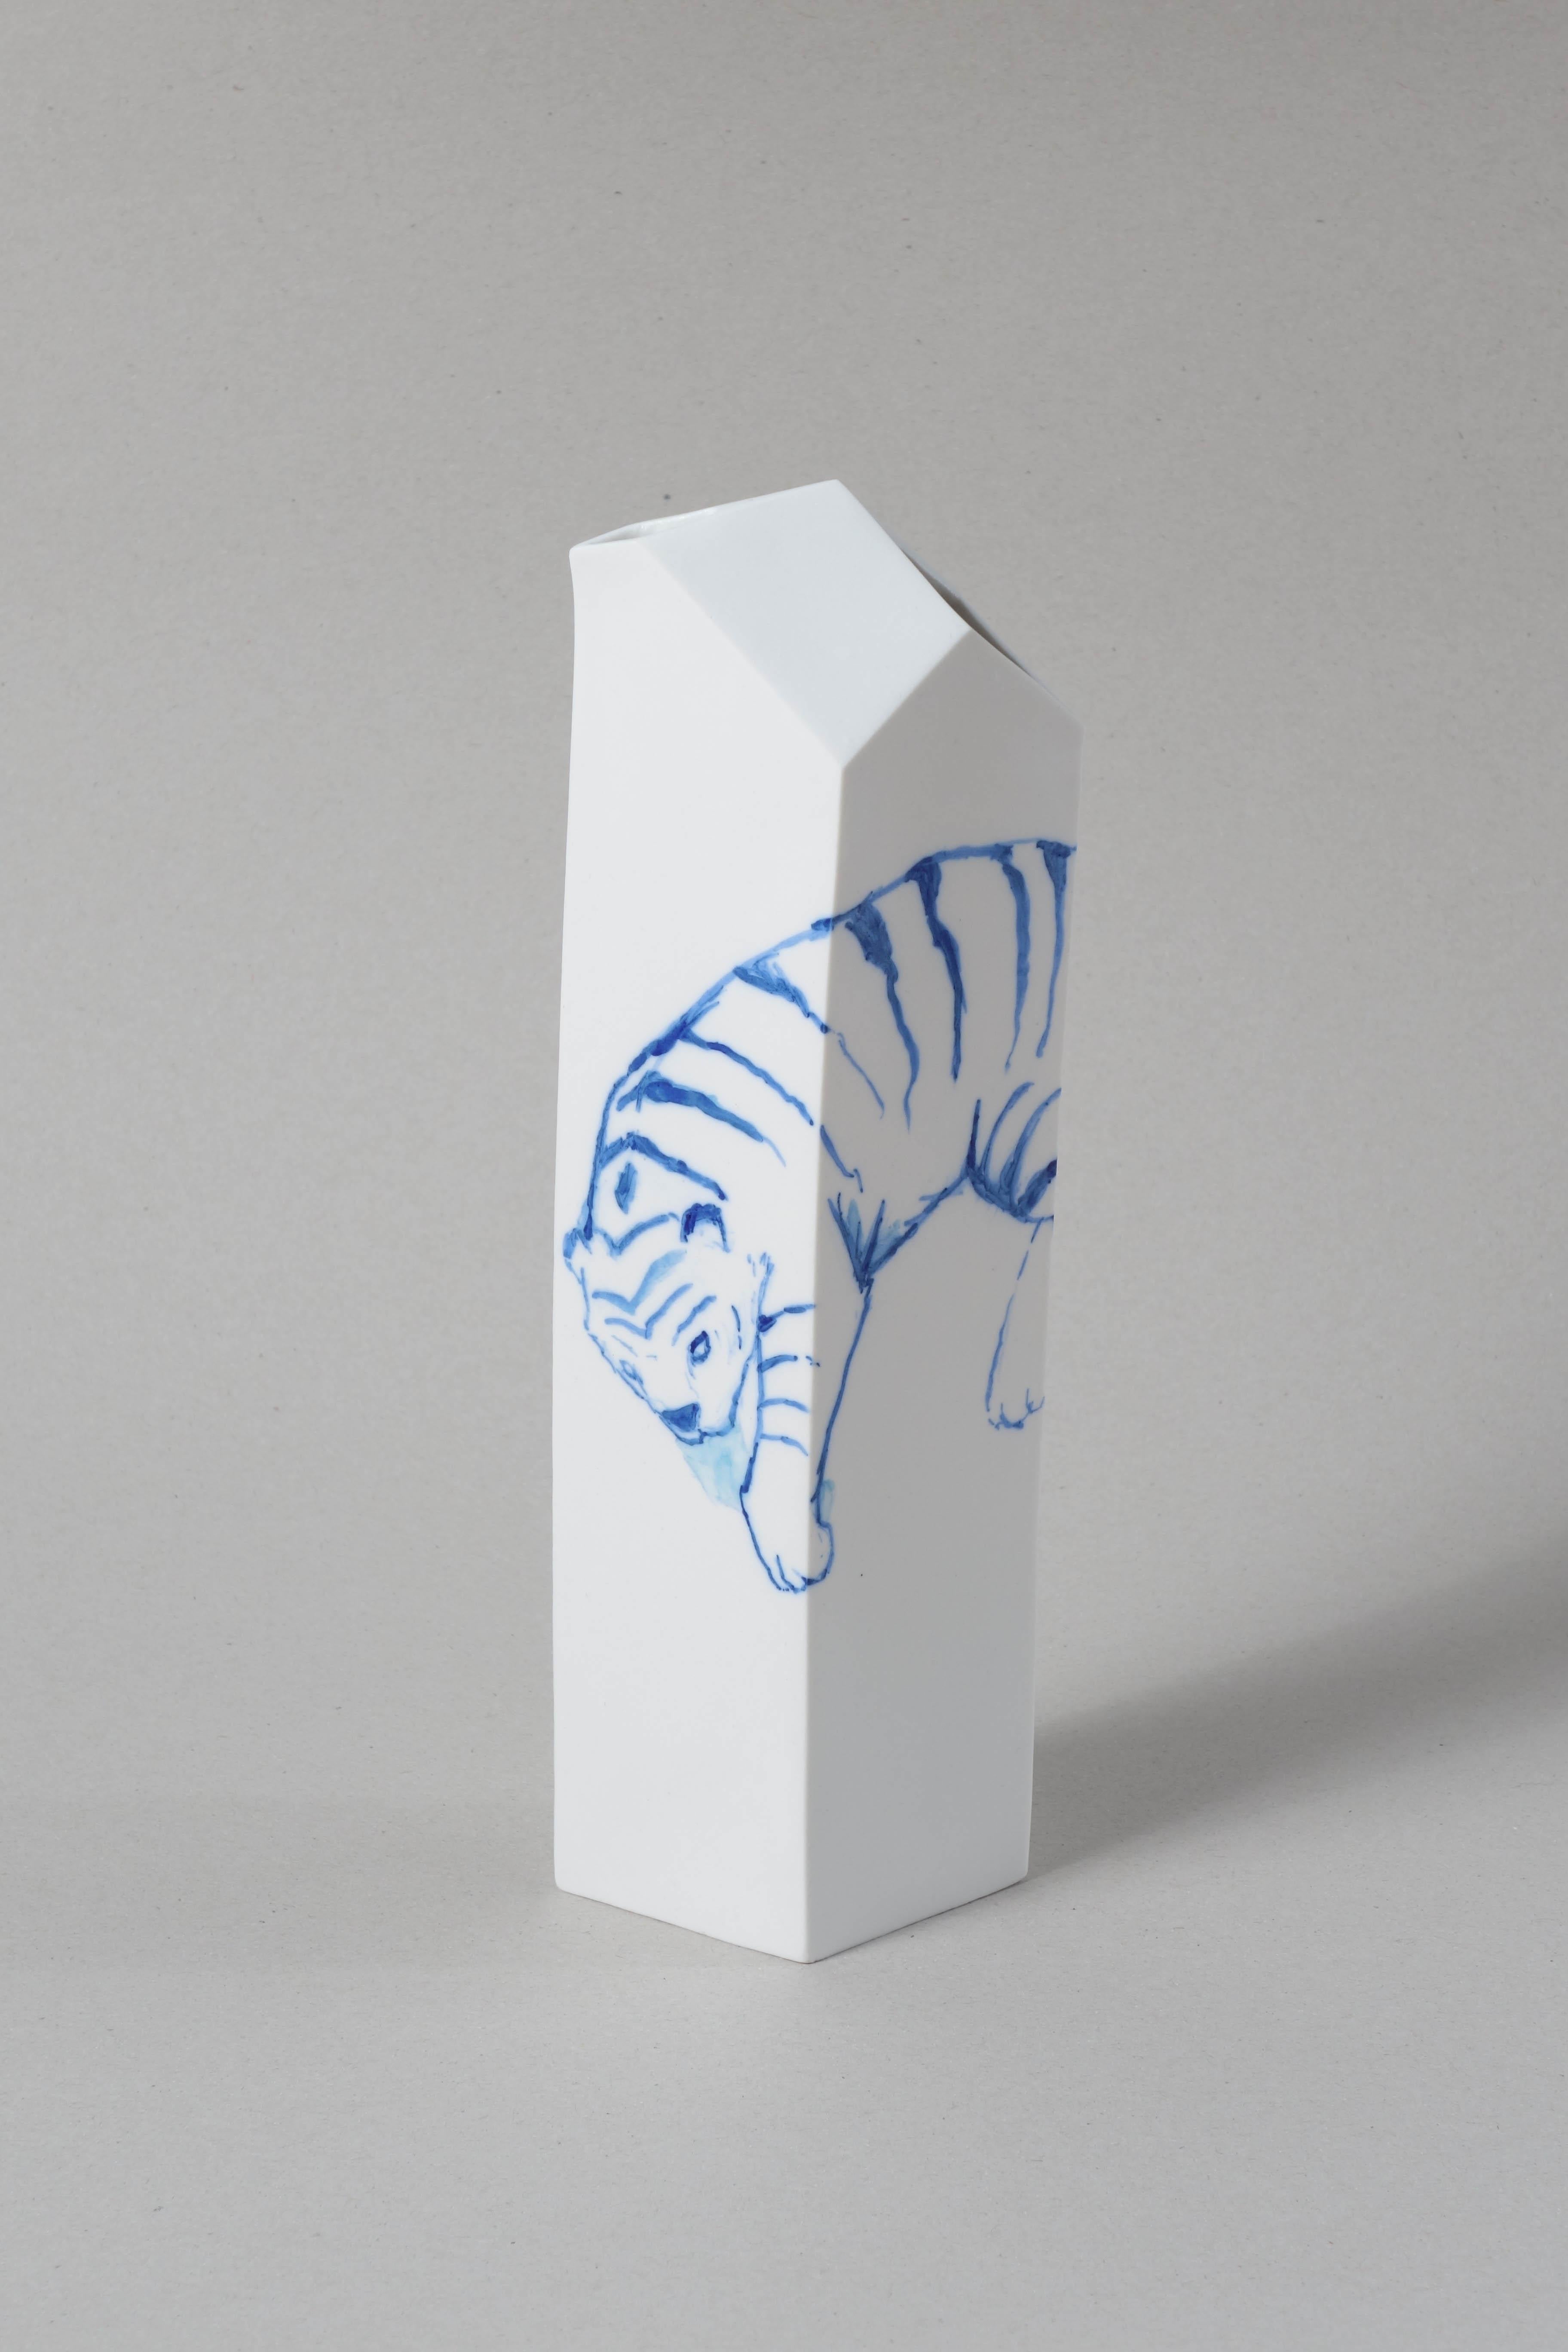 Savage de la Romba by La Cube
In collaboration with savage ceramics
Unique piece, one unit ofr each animal
Madrid, 2016
Materials: Porcelain
Dimensions: 26 x 8.5 x 6.5 cm

Stefano Fusani, Italian artist-designer and Clara Hernández, Spanish